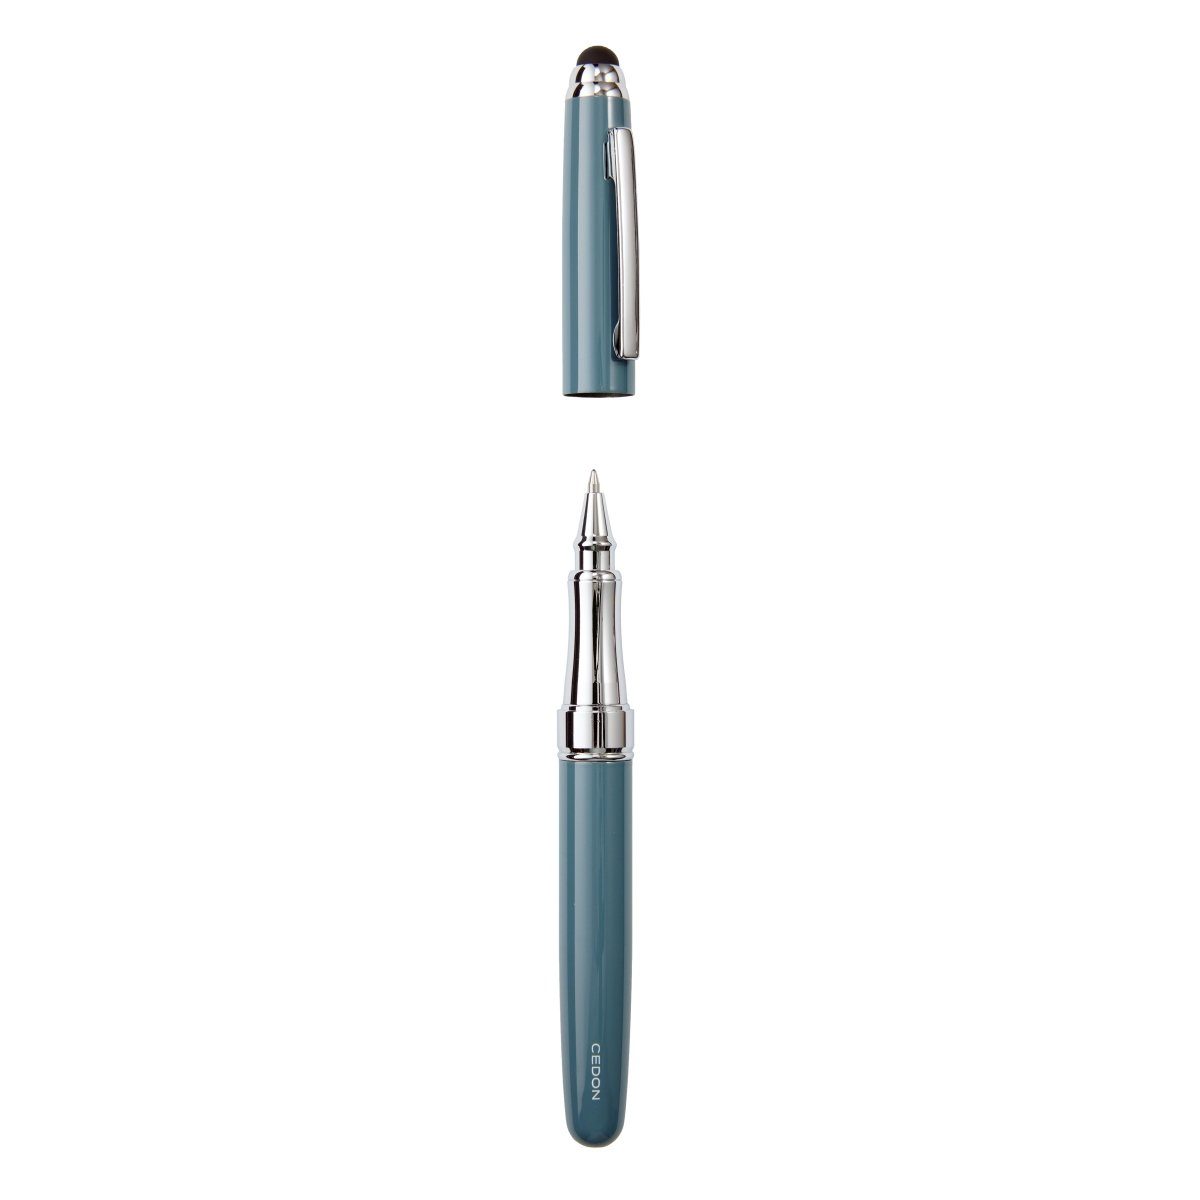 Blau Museum Shops schwarz Touch-Pen 14cm 0,7mm funktion Tintenroller Schreibfarbe Cedon Tintenroller